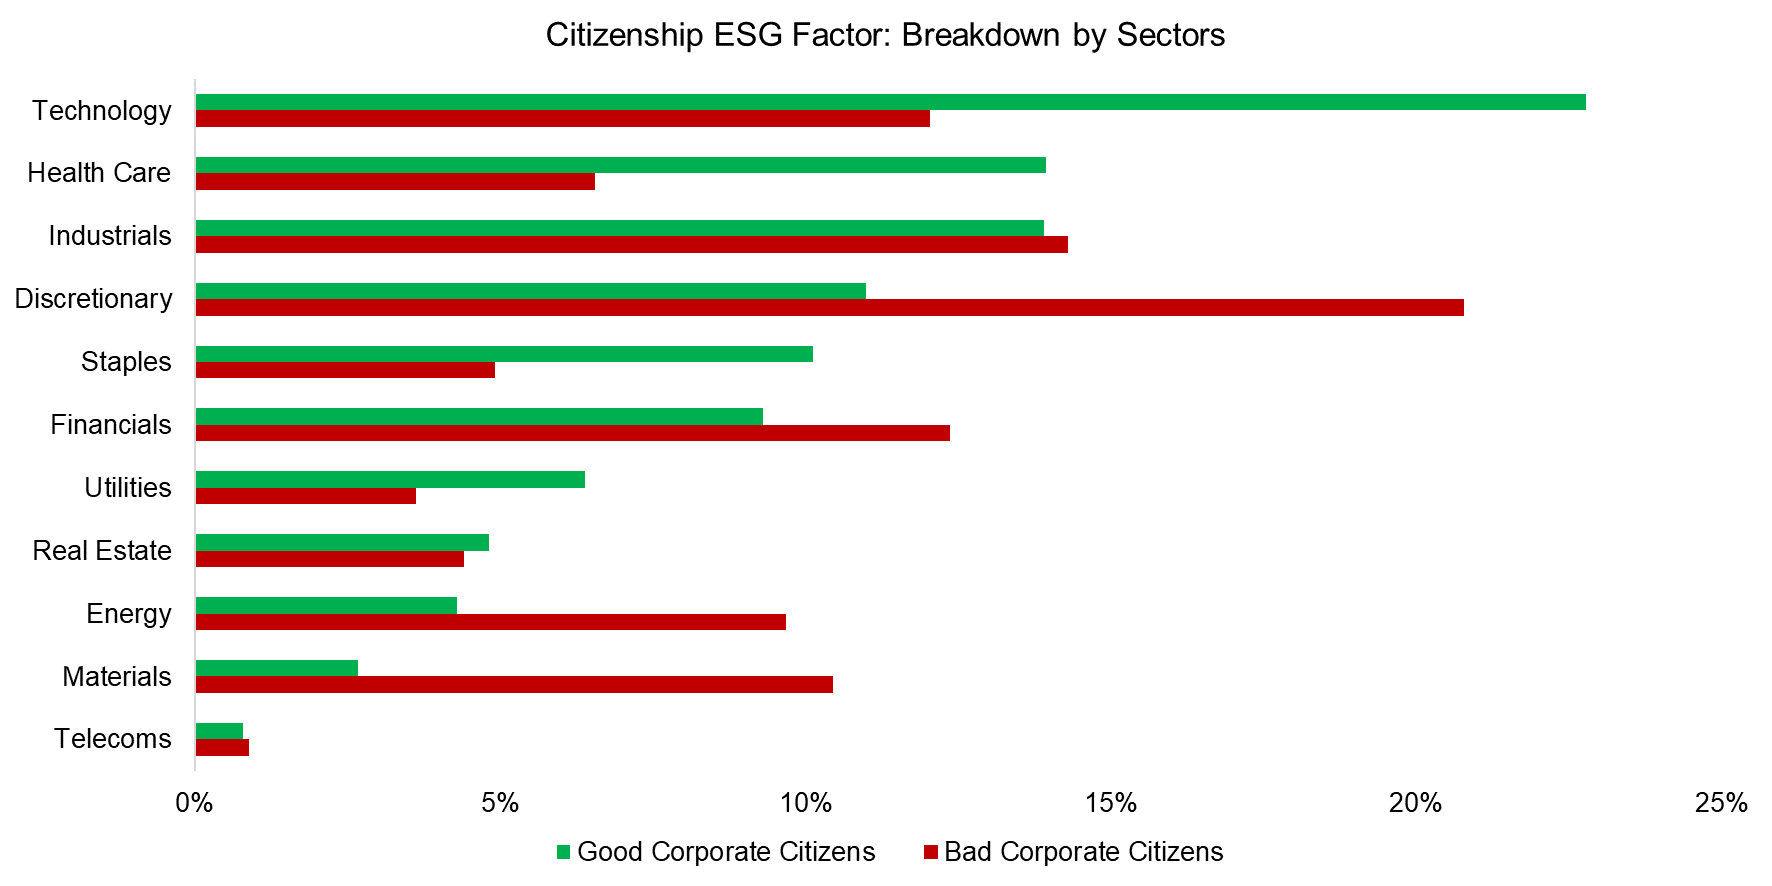 Citizenship ESG Factor Breakdown by Sectors